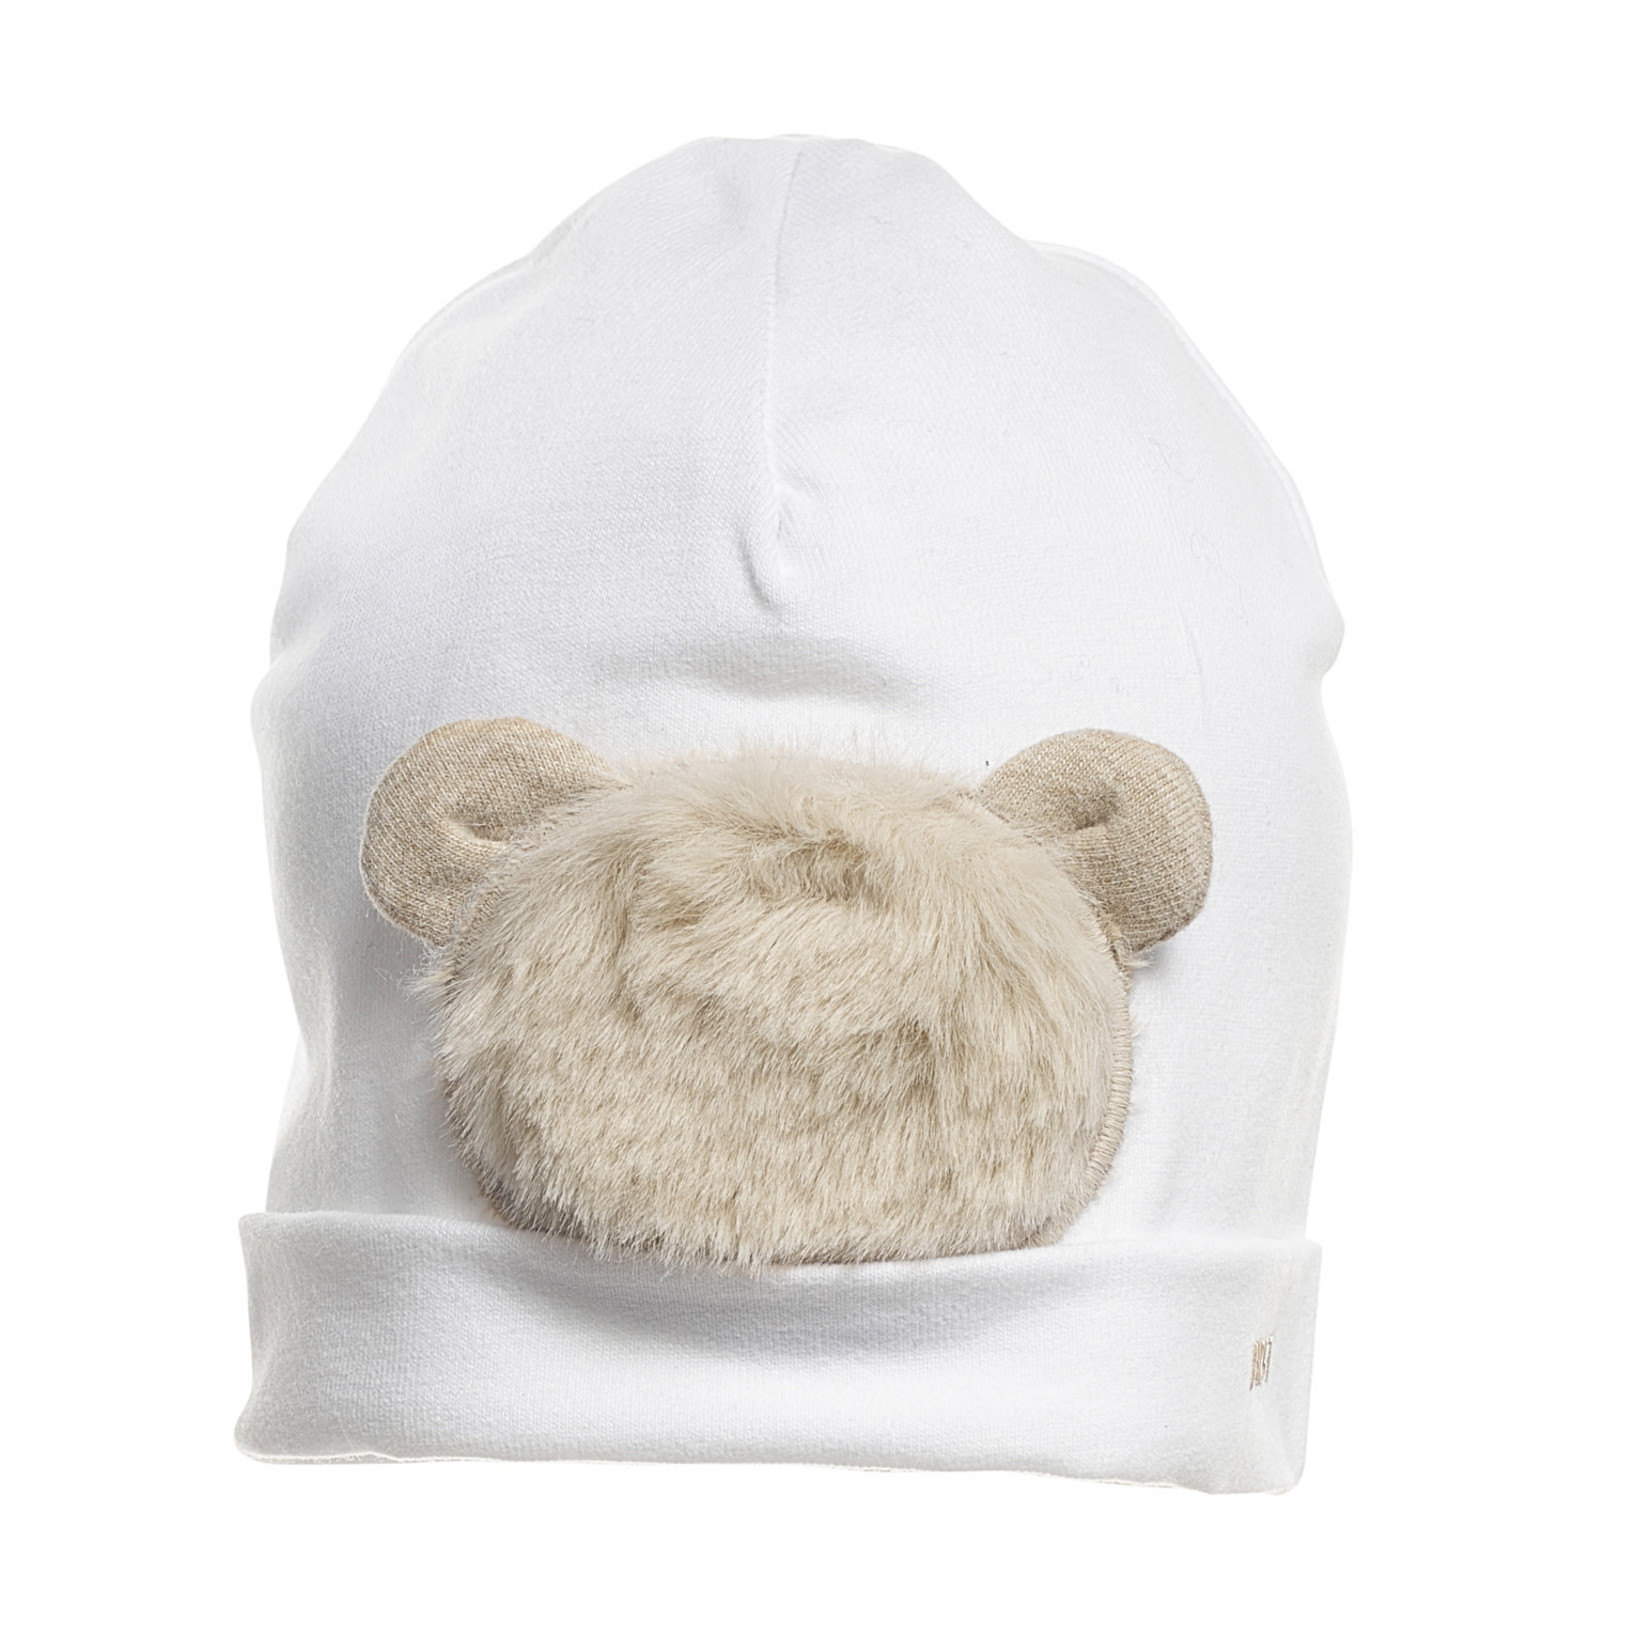 First B bonnet xl fur teddy bear